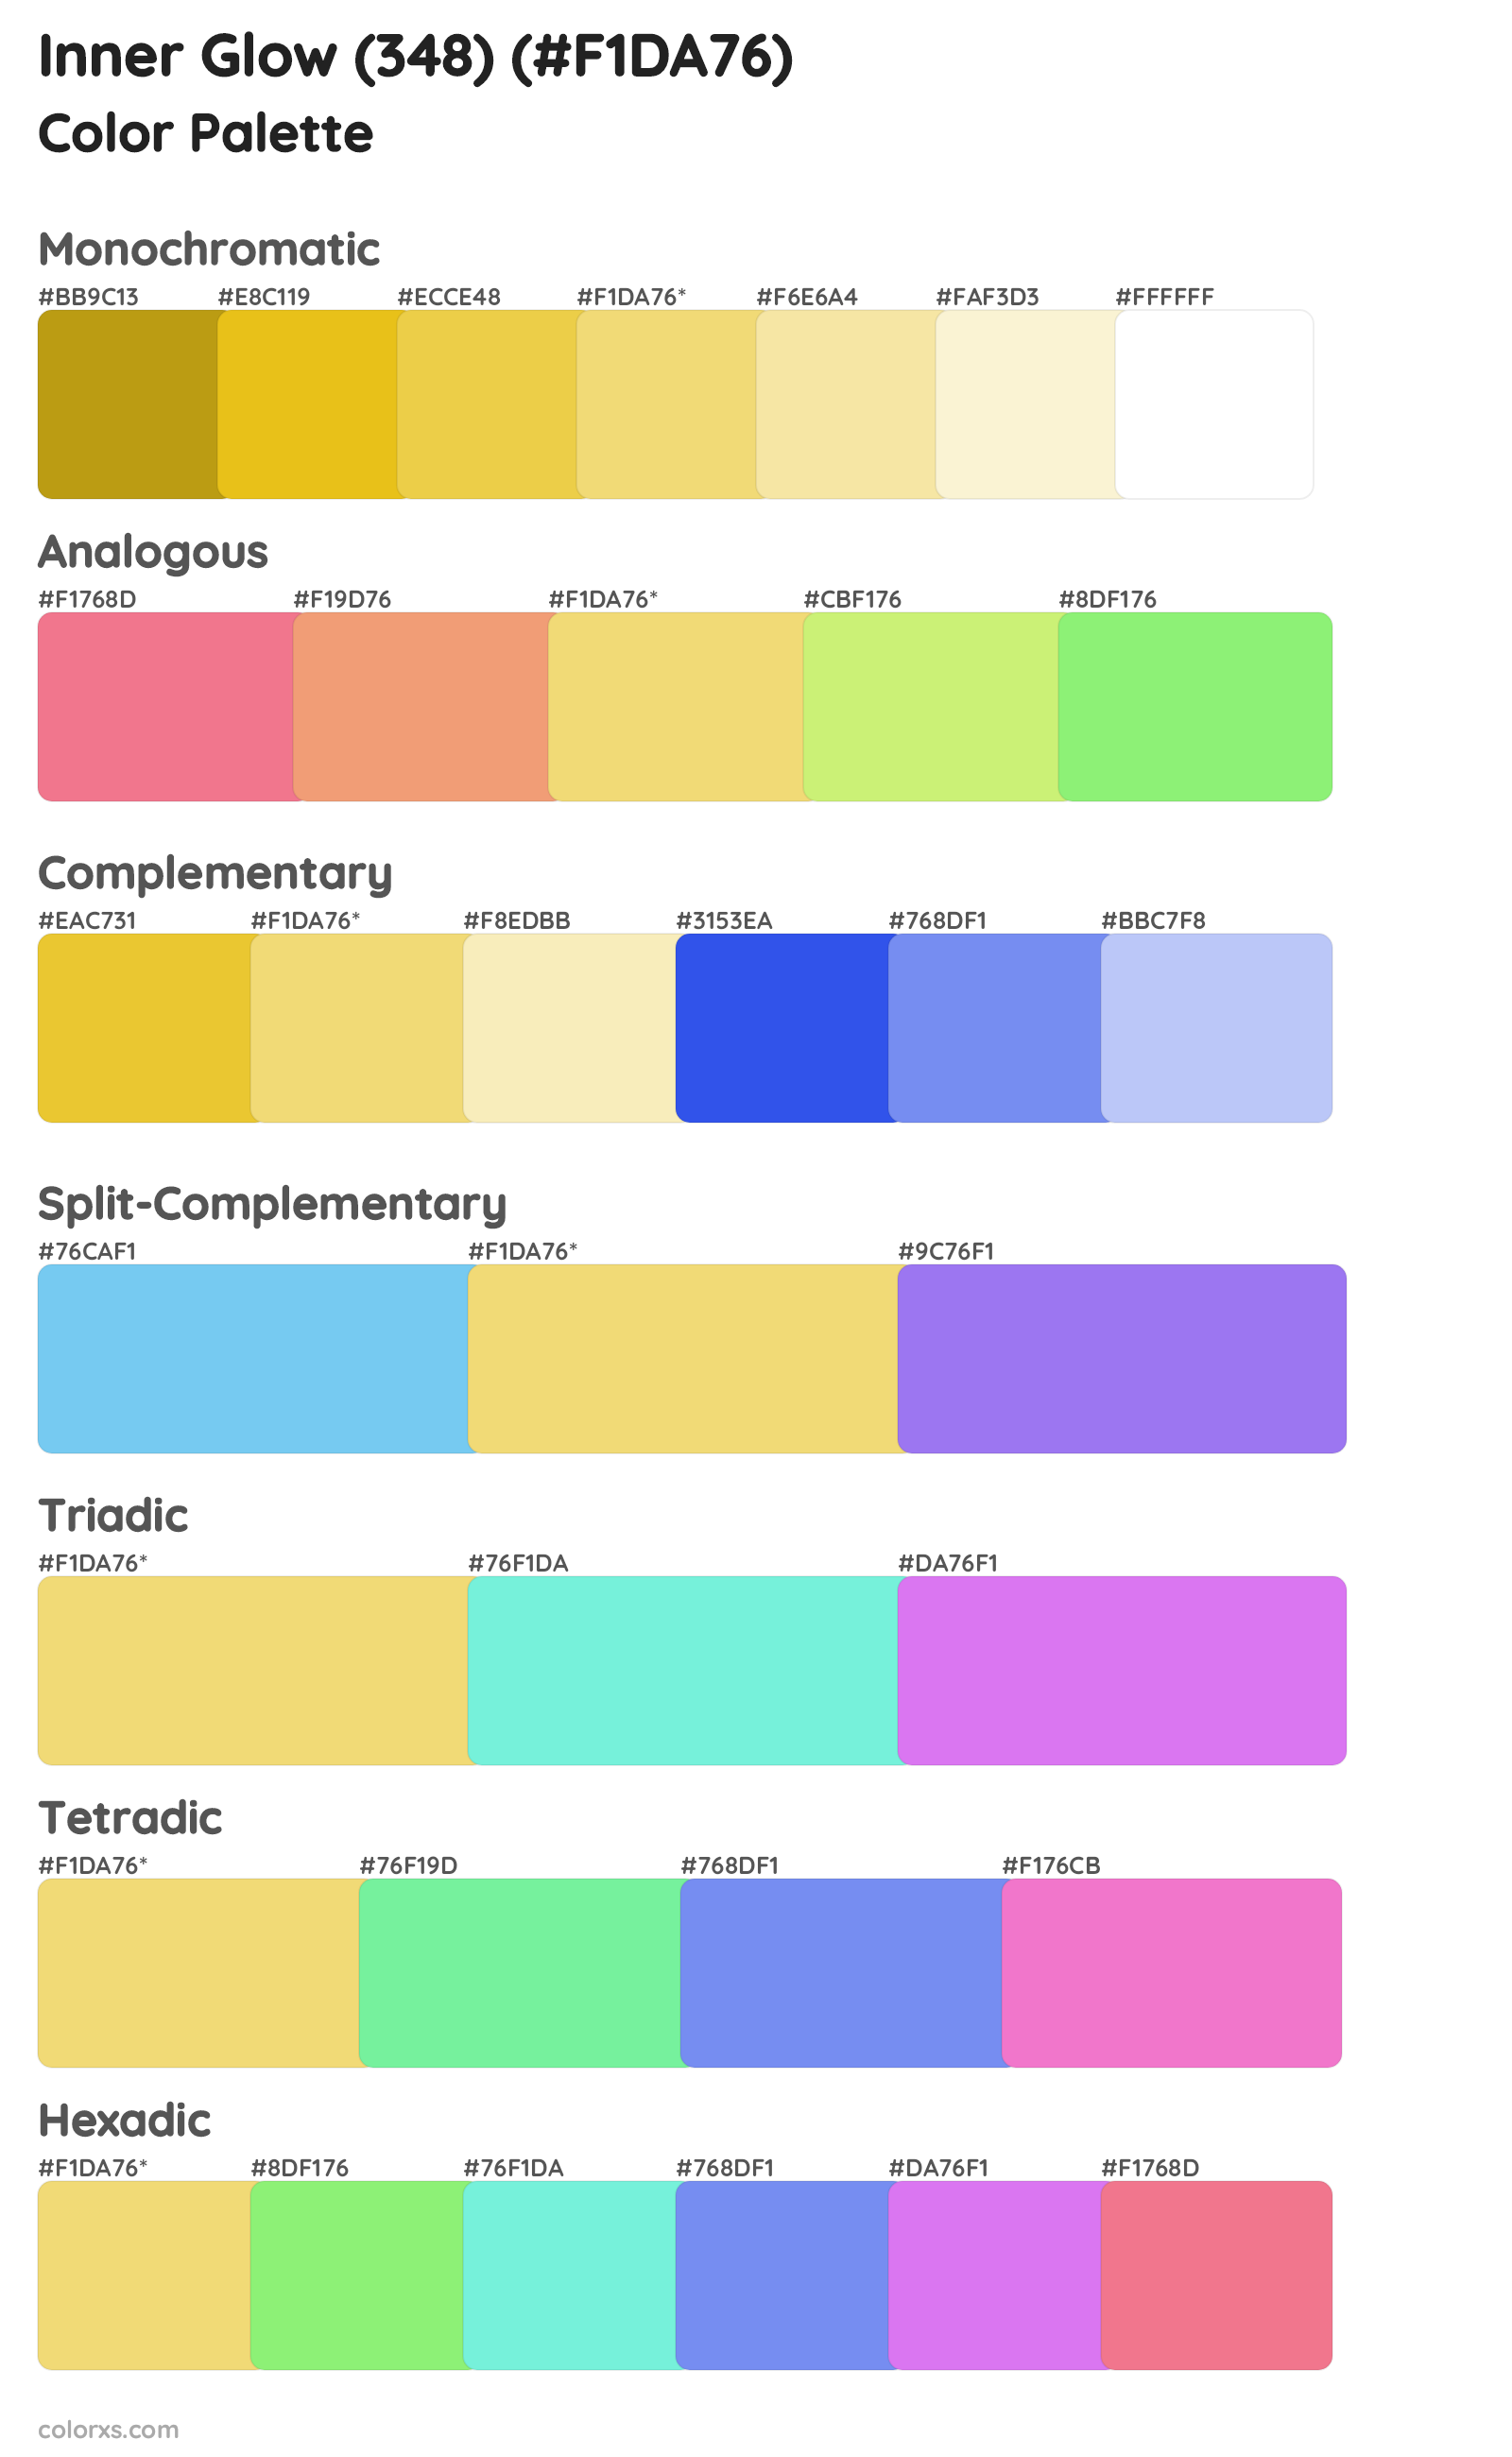 Inner Glow (348) Color Scheme Palettes